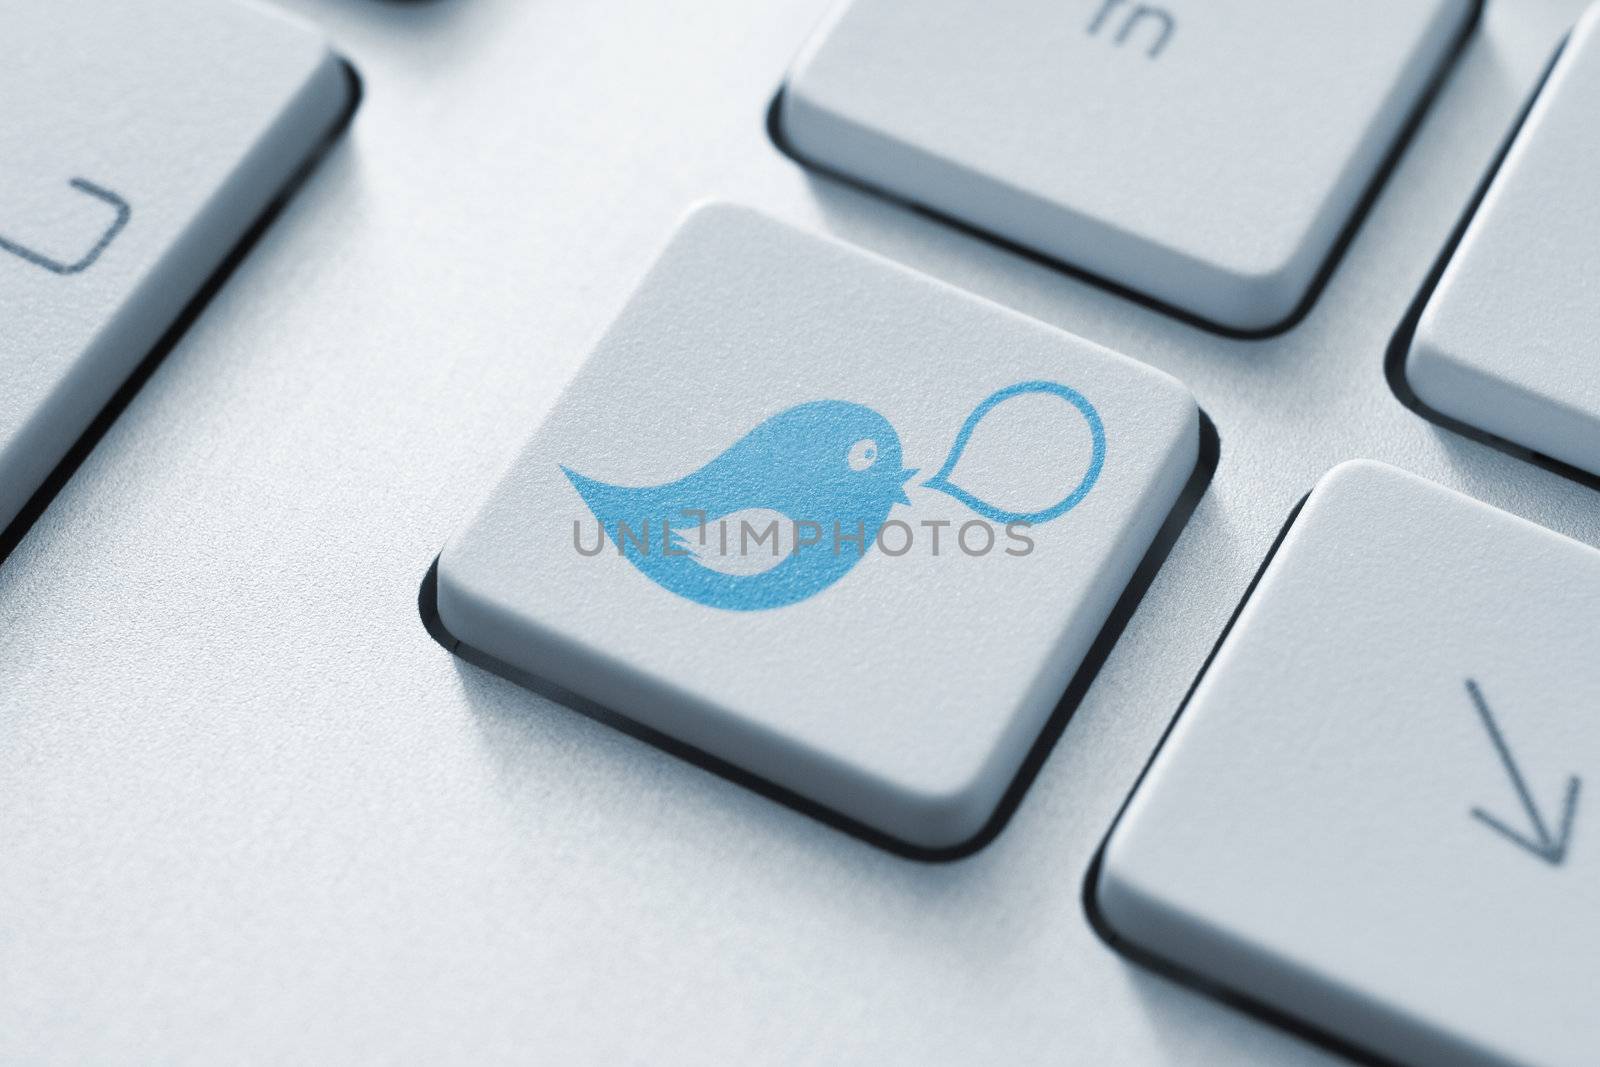 Blue bird with speech bubble on keyboard button. Social media concept.